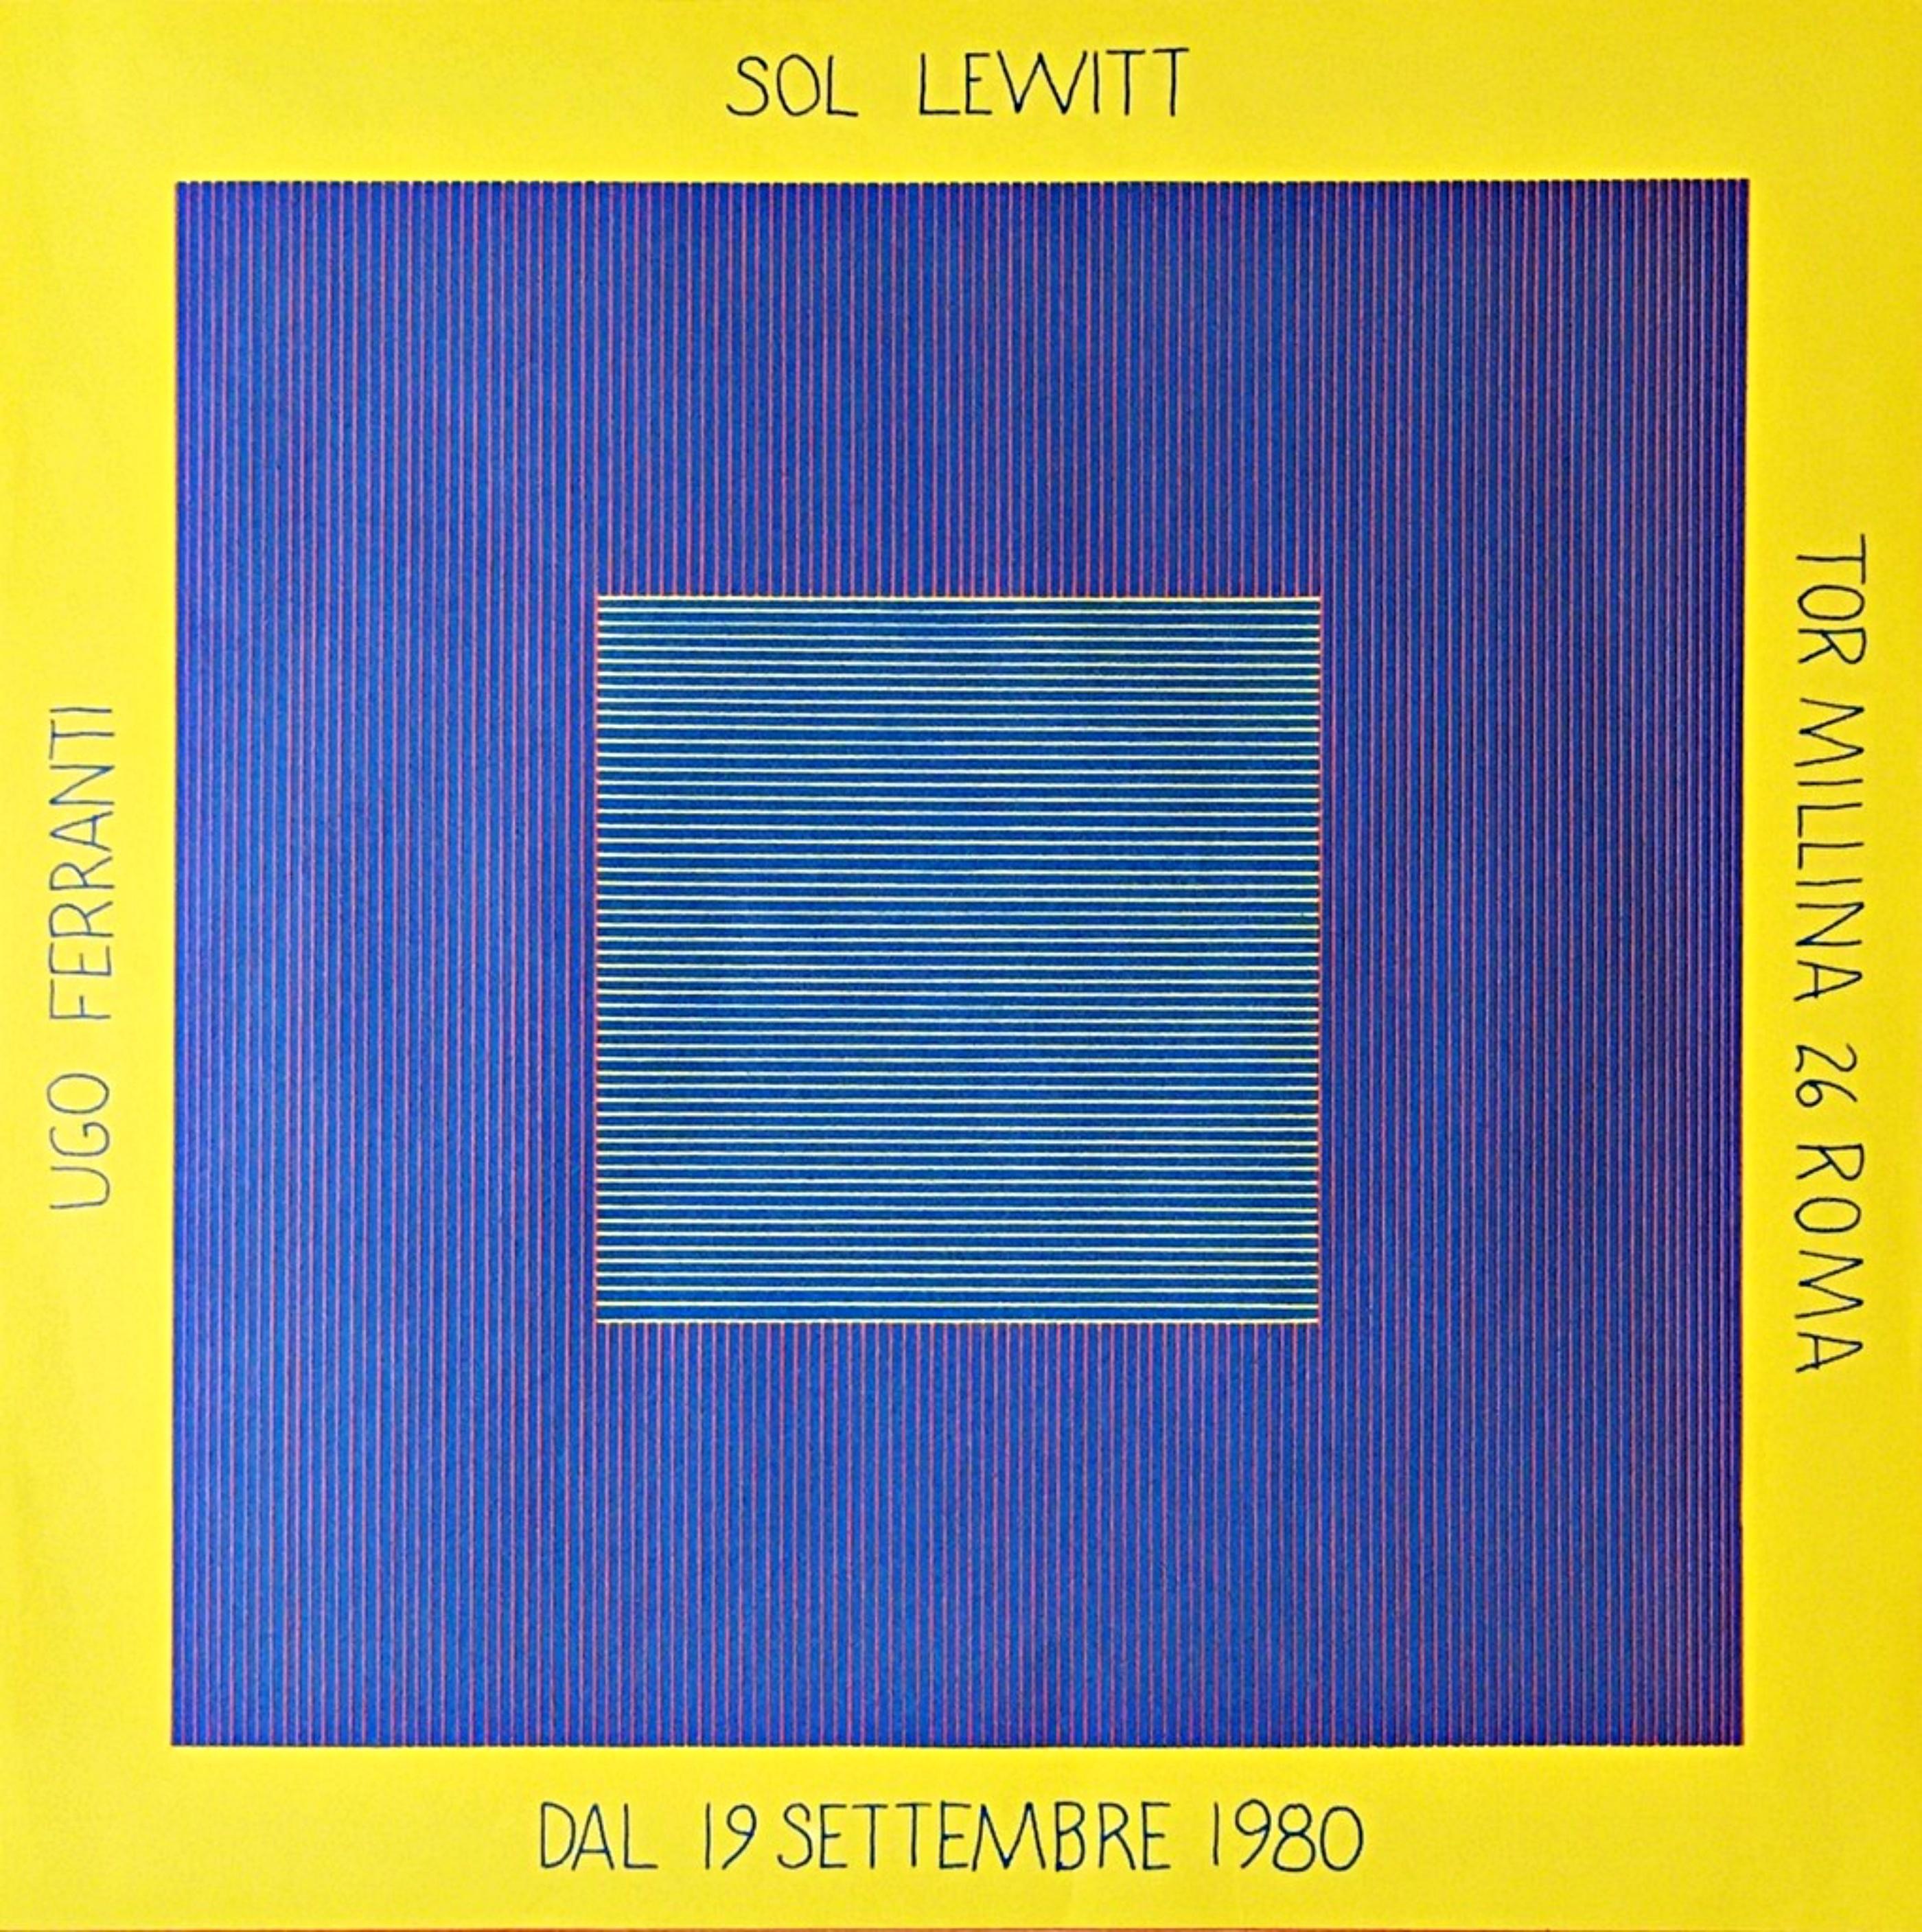 Rare Italian exhibition invitation Ugo Ferranti hand signed by Sol Lewitt Framed - Abstract Geometric Print by Sol LeWitt